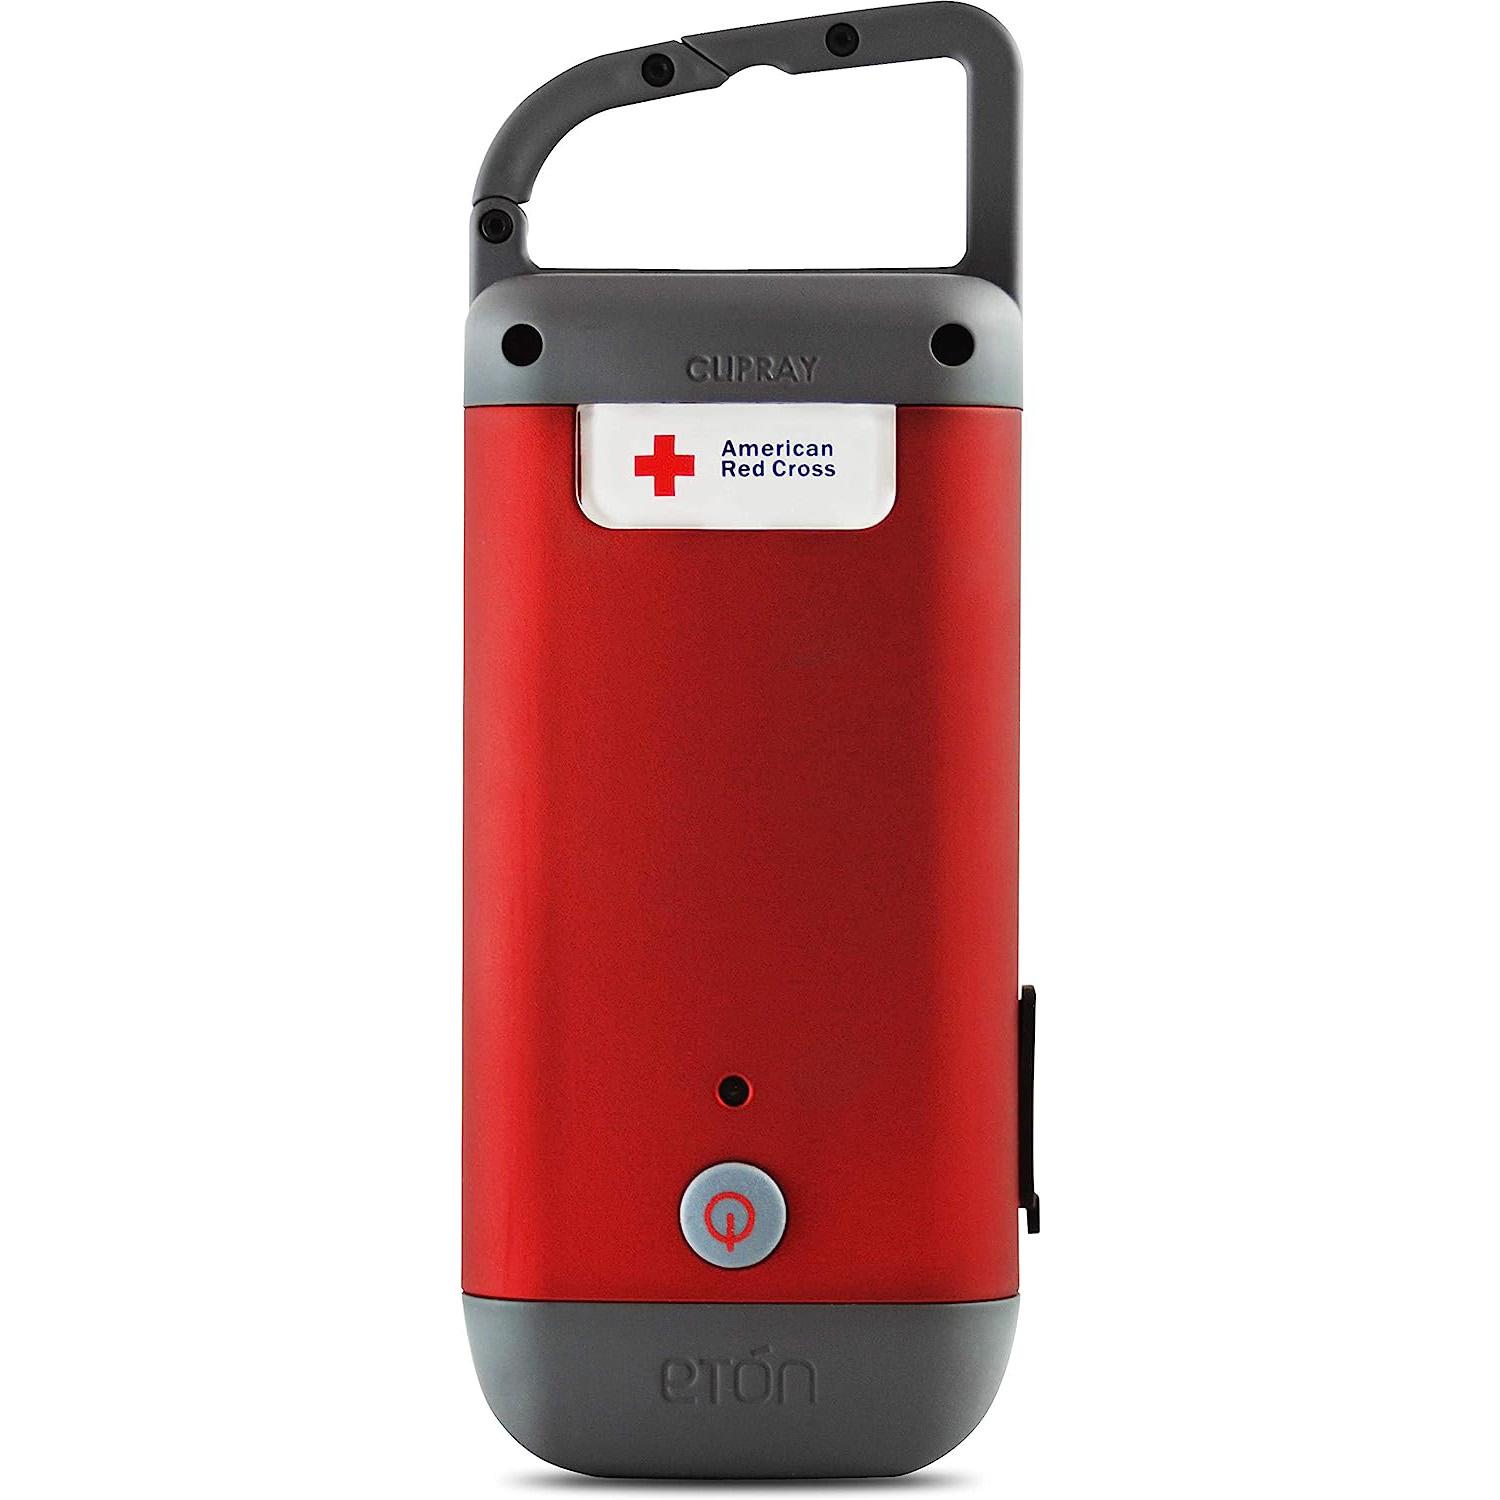 Eton American Red Cross Hand Crank Powered Flashlight for $4.88